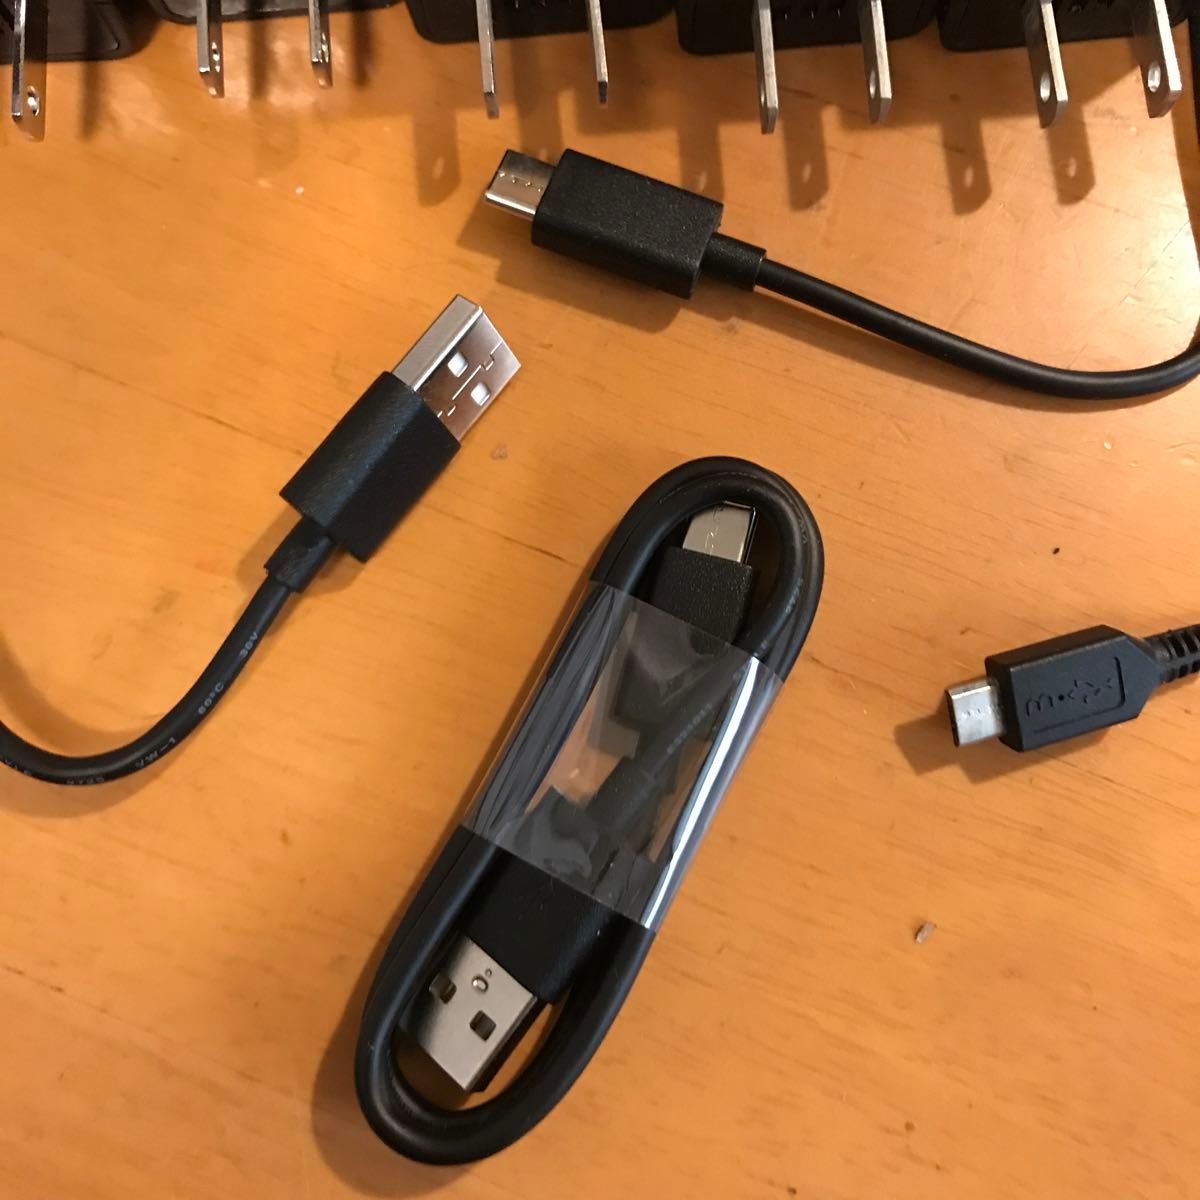 USB 充電器　5個、ケーブル3個、JT  bloom純正品 中古品、未使用品混在です。たぶん ケーブルはType-C